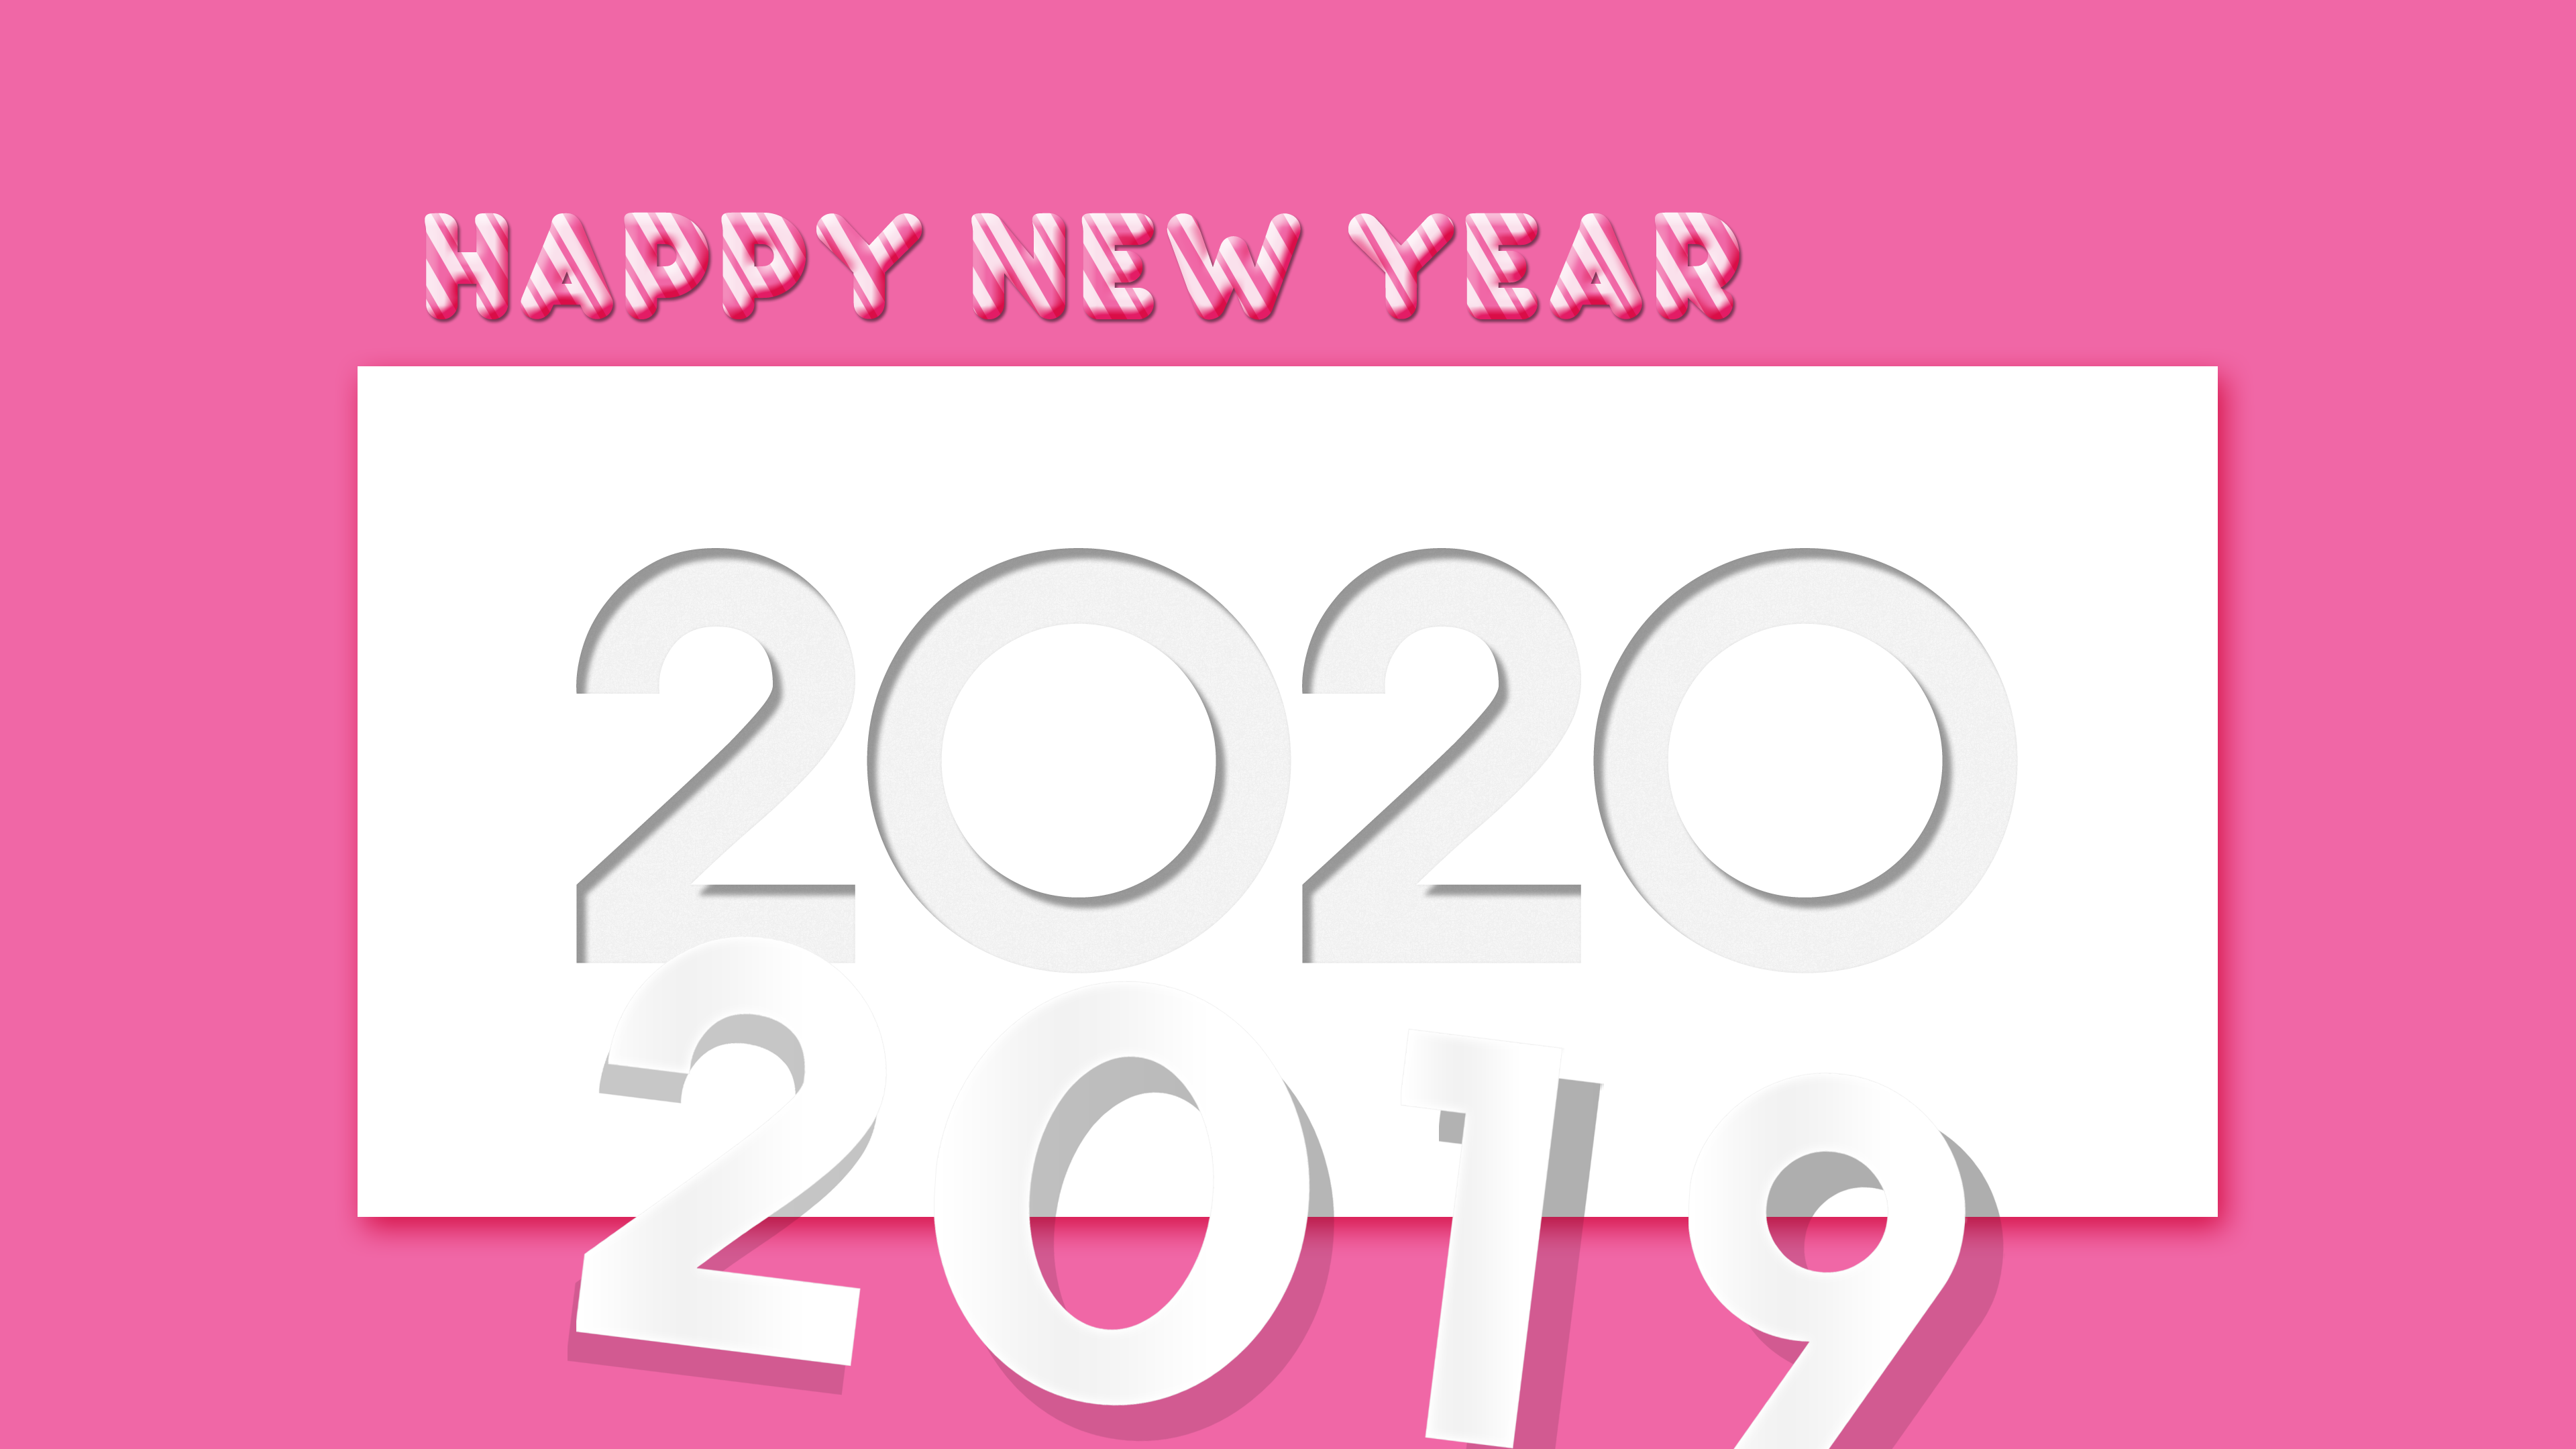 General 3840x2160 New Year 2020 (Year) 2019 (year) holiday simple background digital art